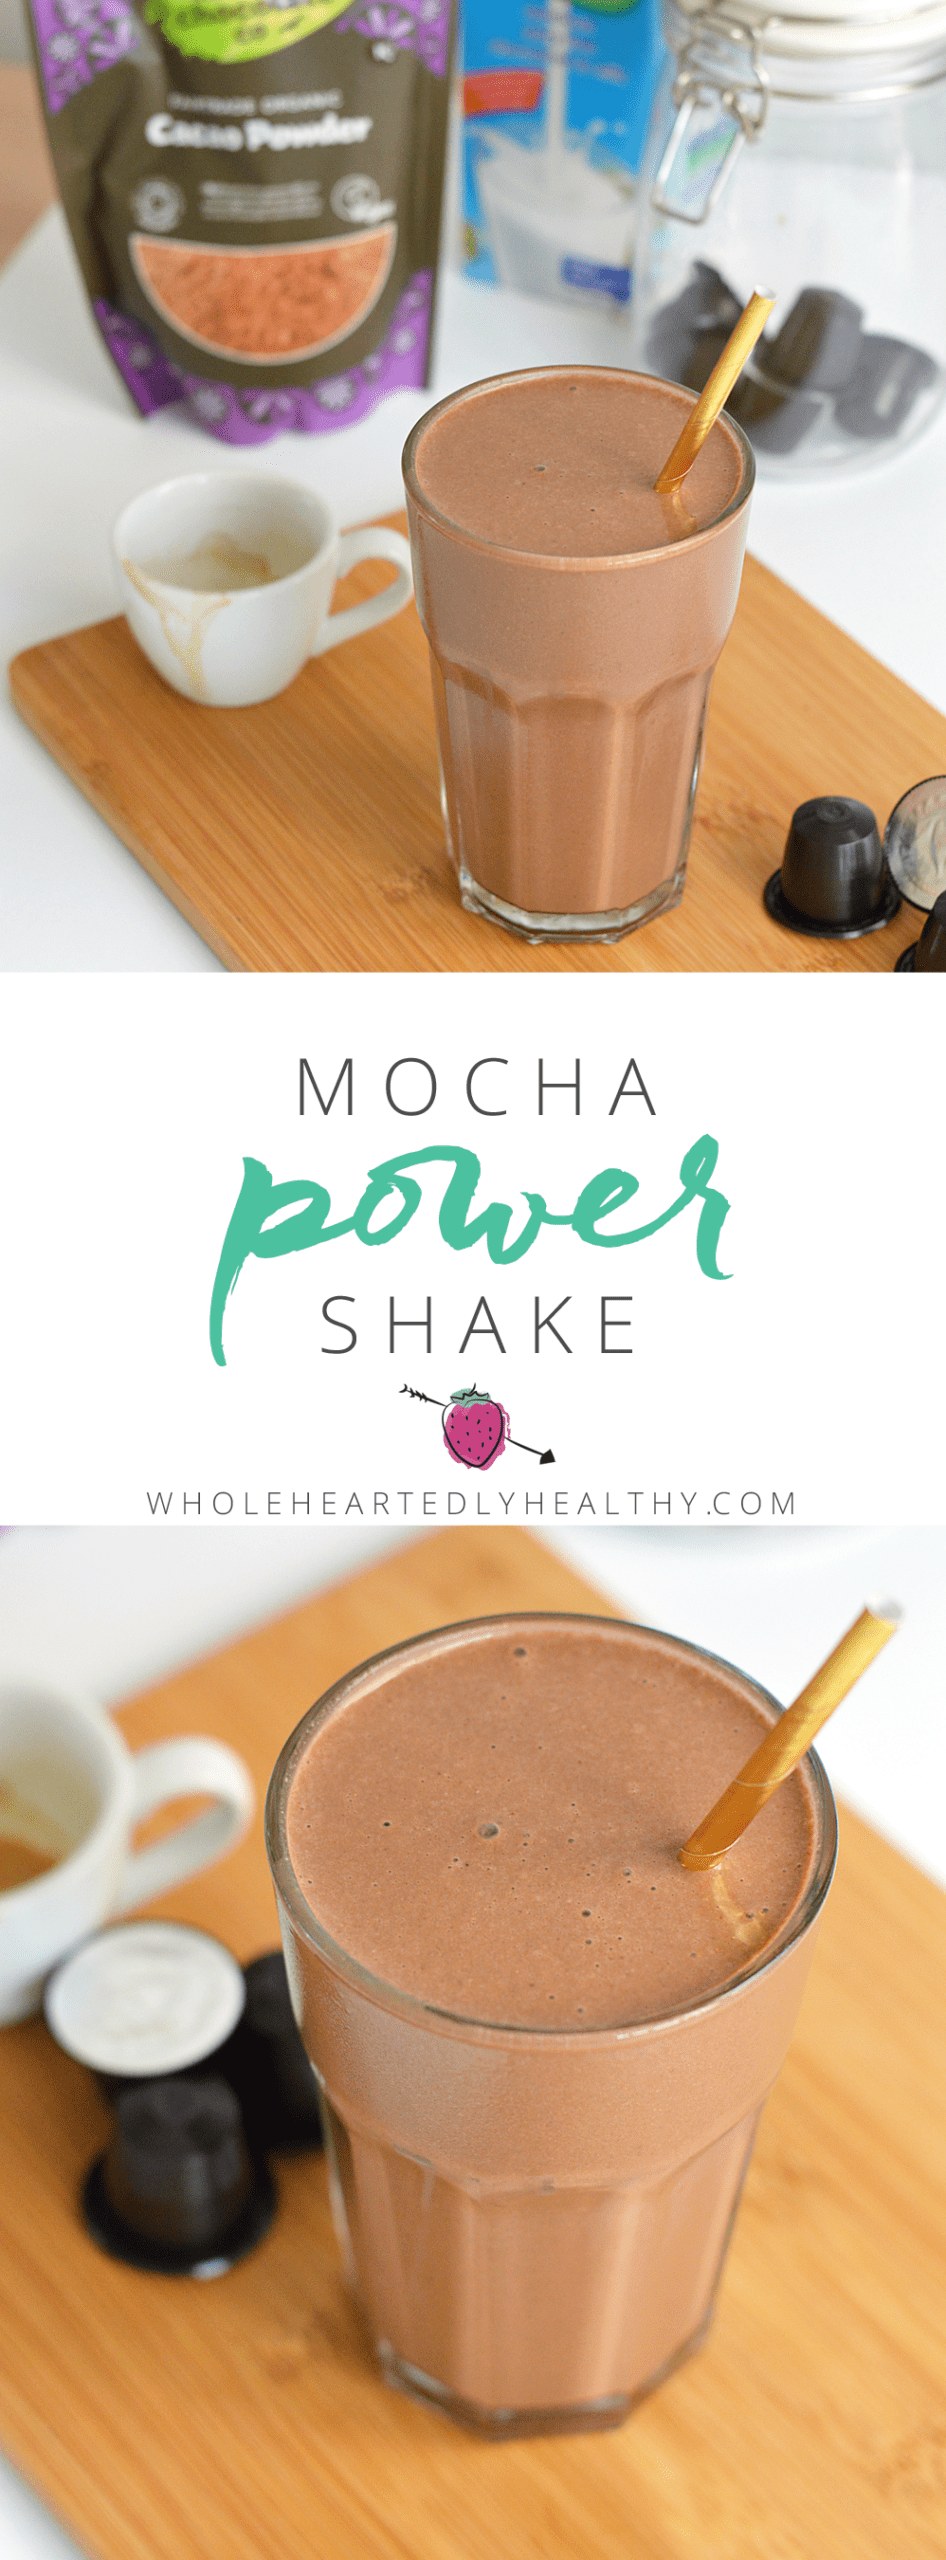 Mocha power shake